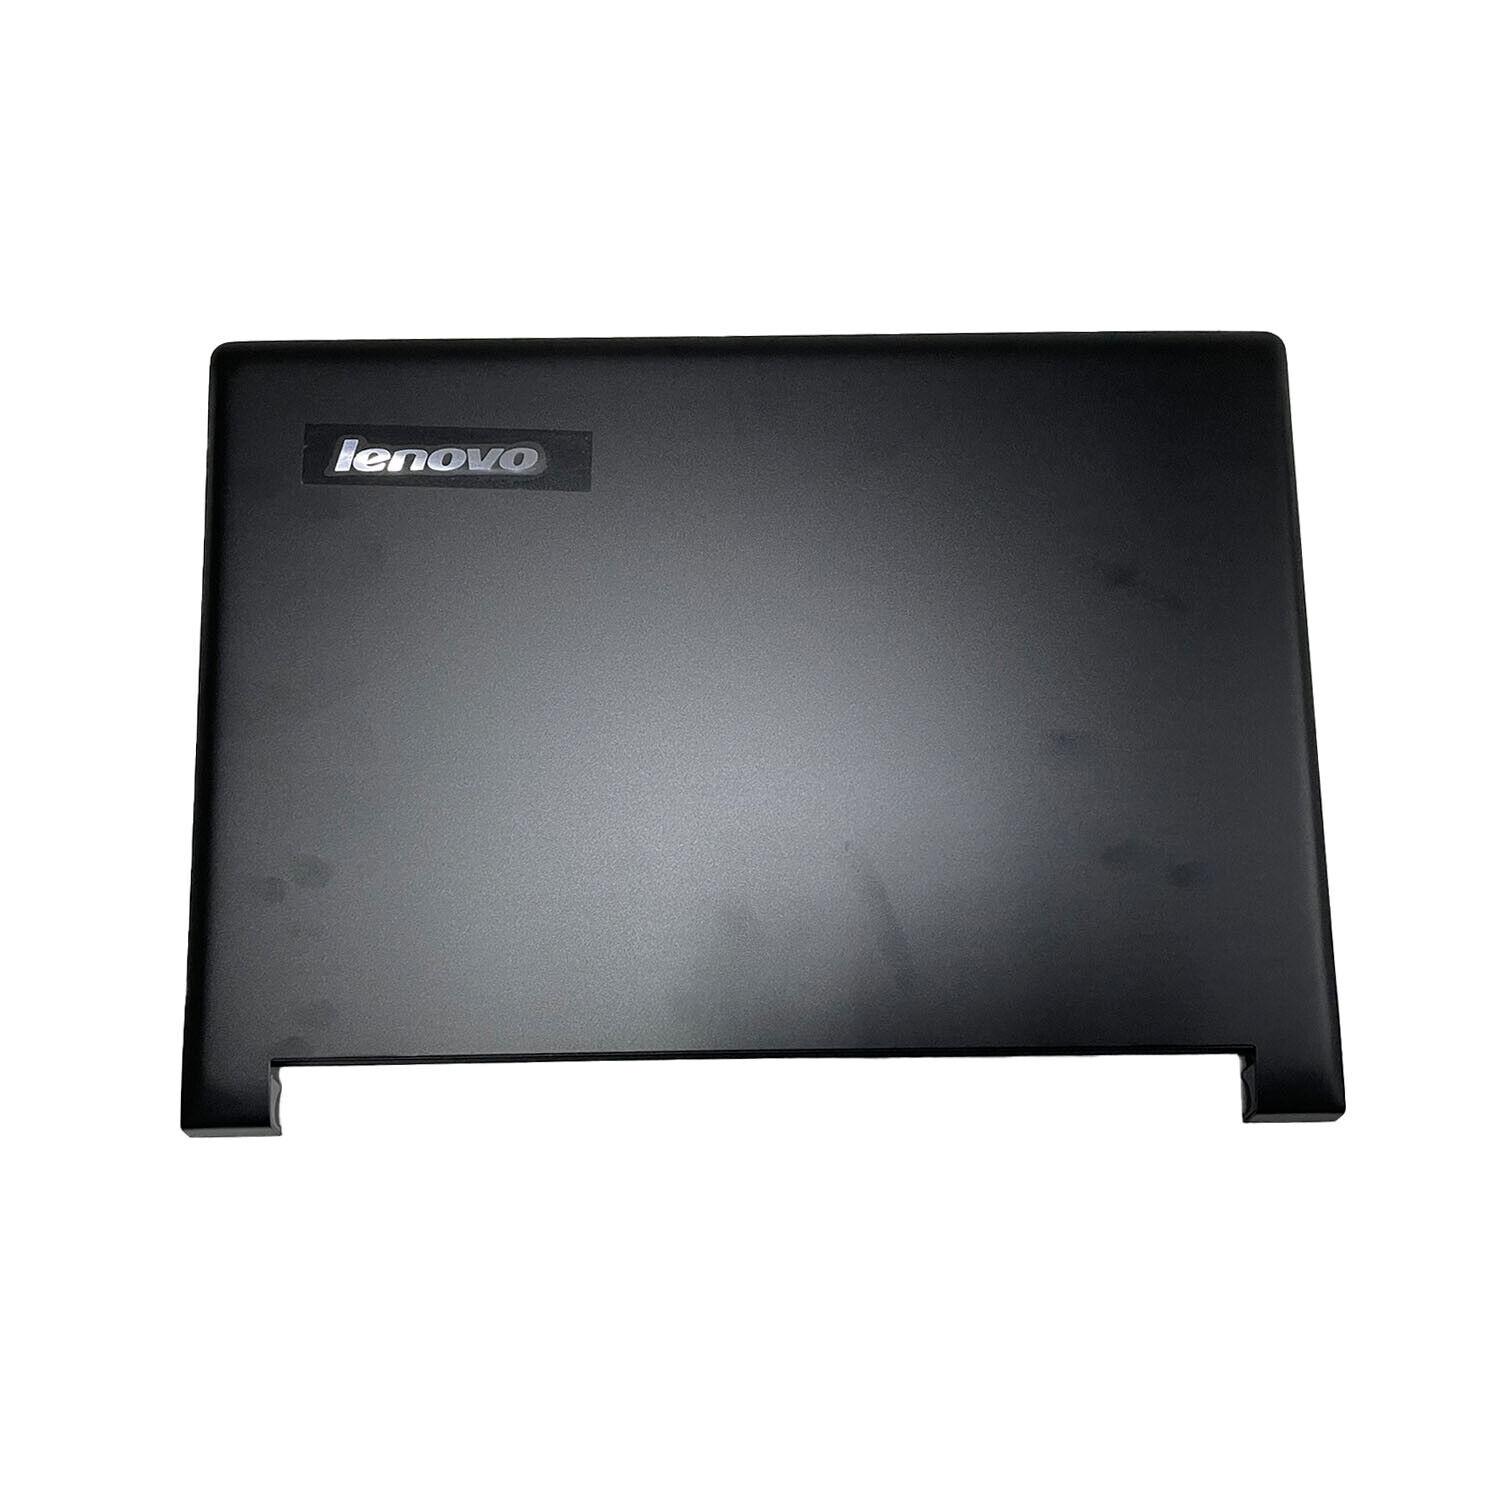 For Lenovo Flex 2-15 Pro Edge 15 LCD Back Cover Top 460.00W0O.0005 5B30G91193 US